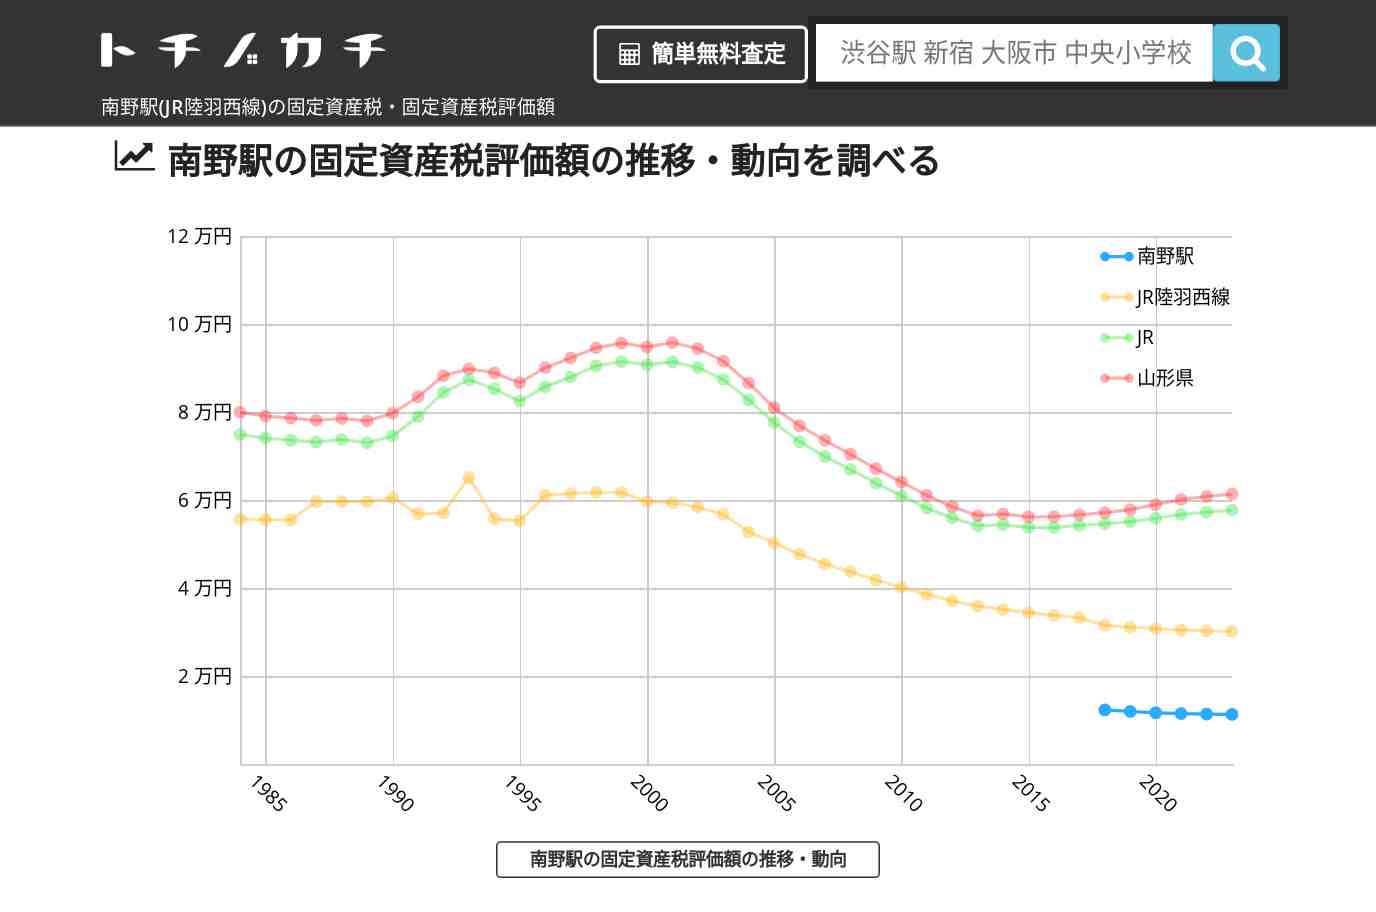 南野駅(JR陸羽西線)の固定資産税・固定資産税評価額 | トチノカチ